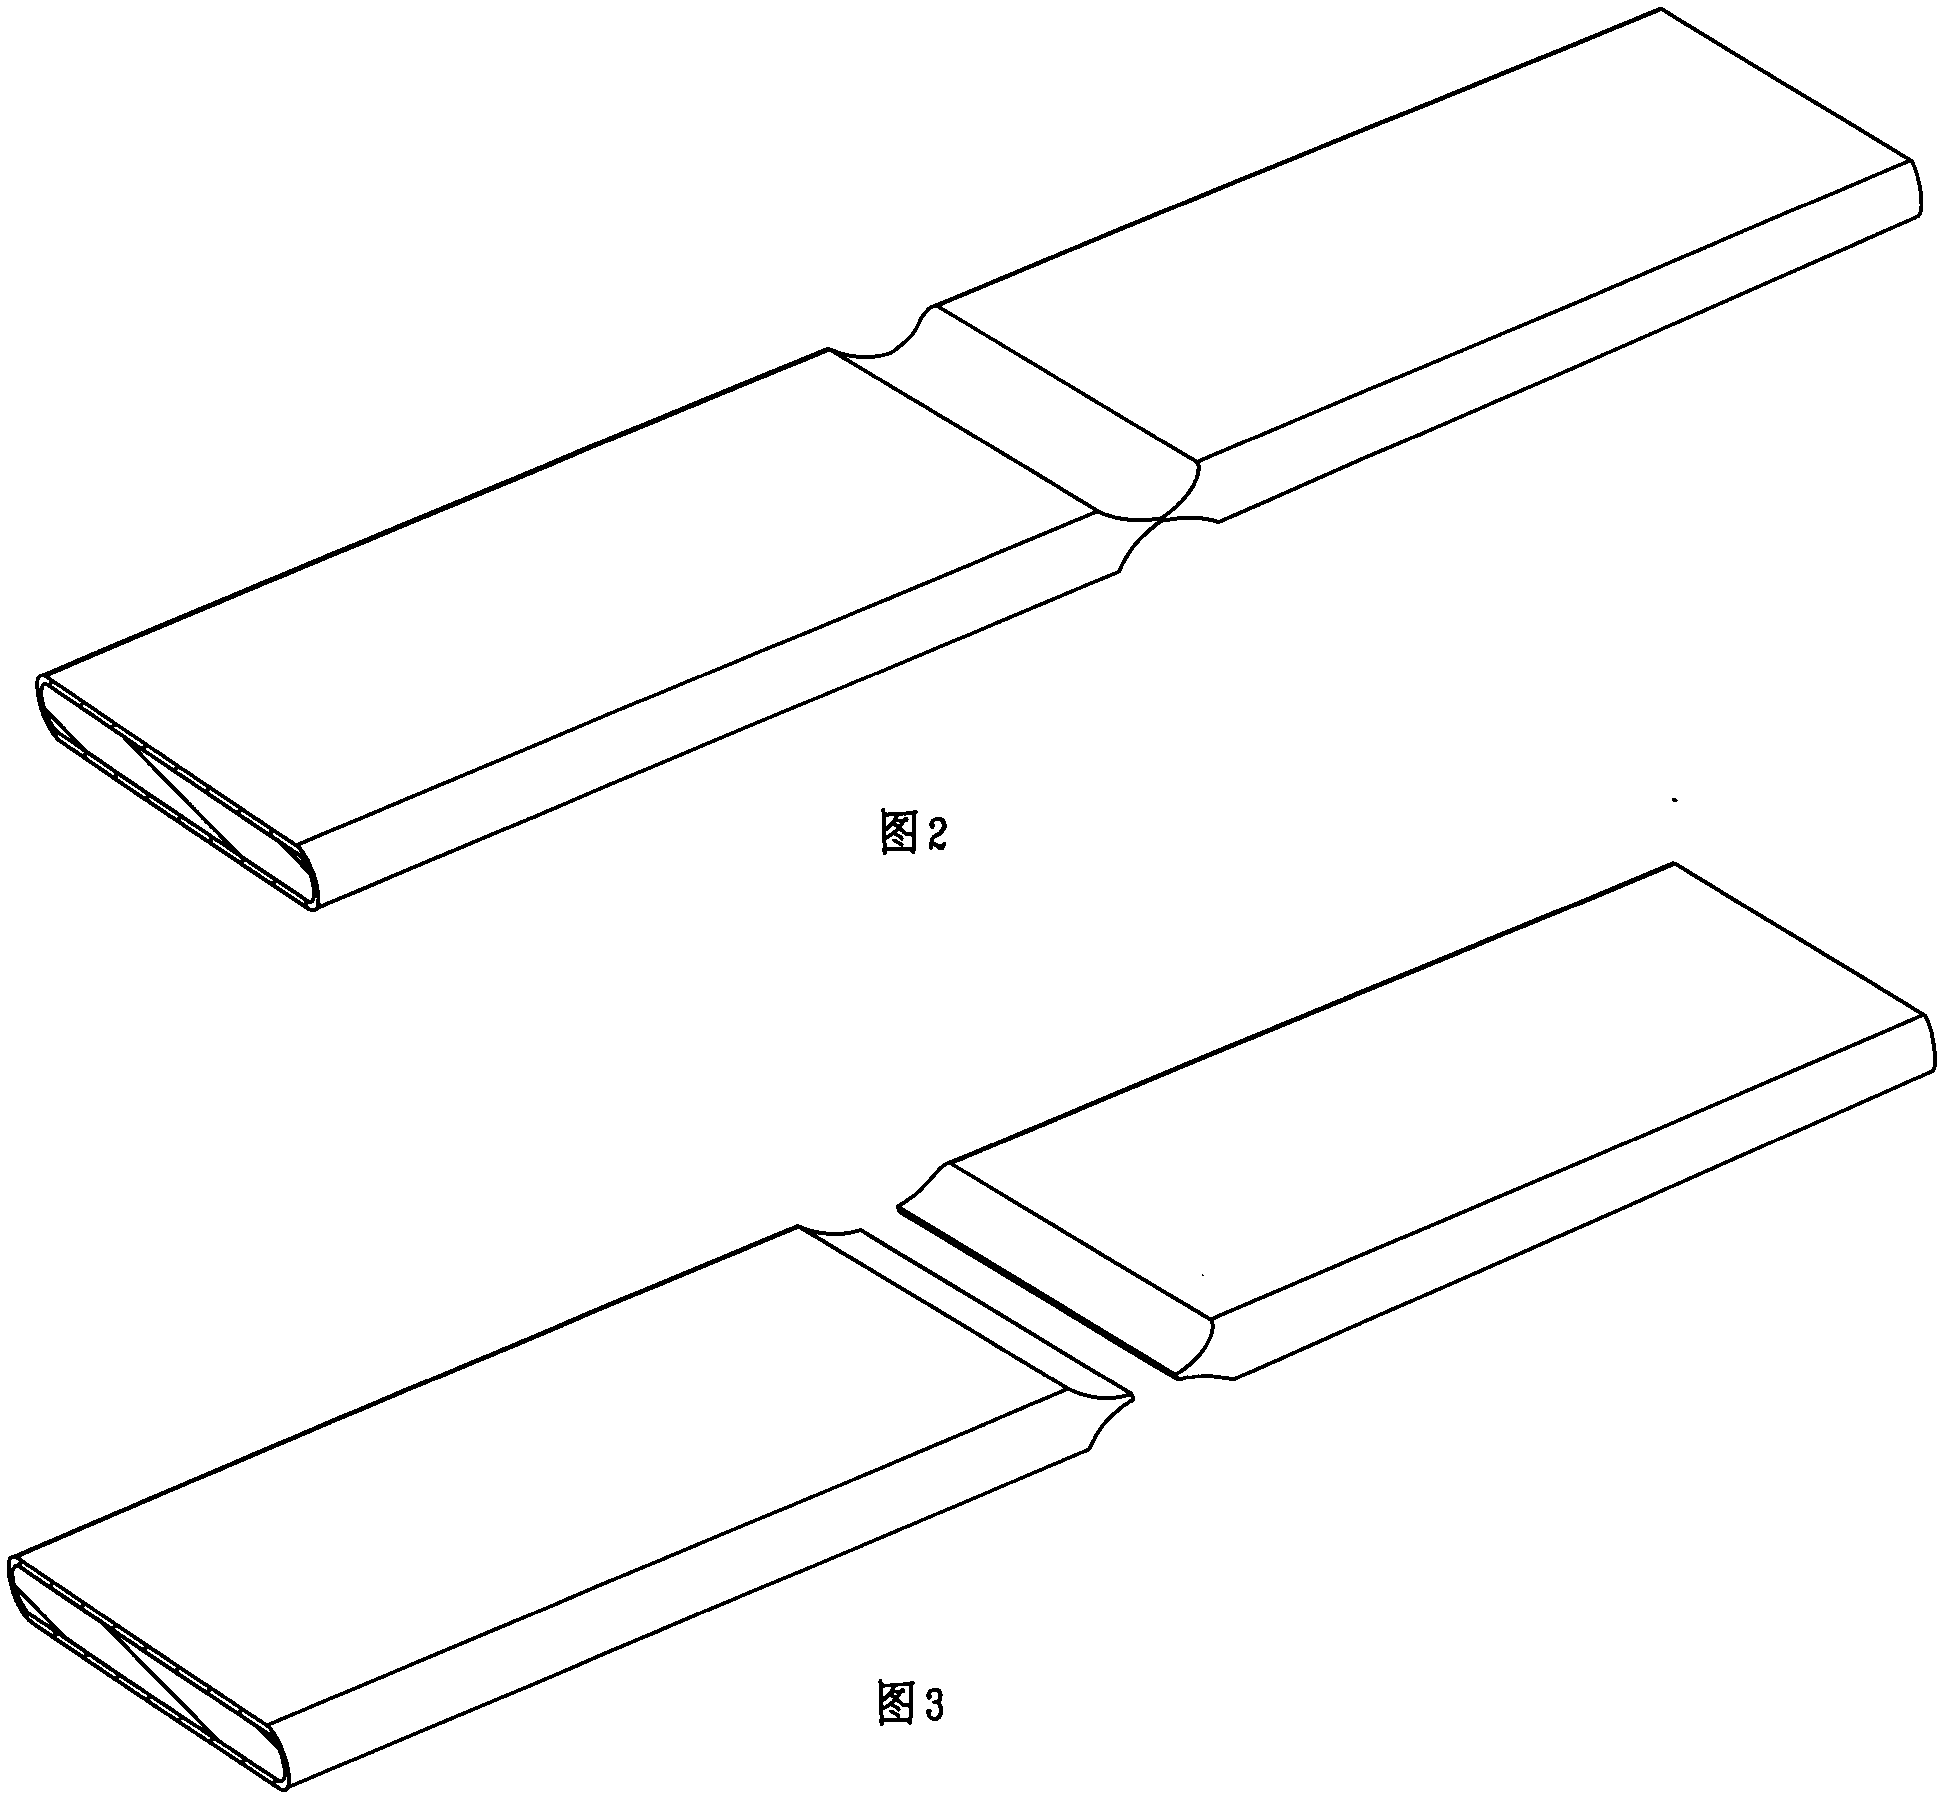 Cutting method for copper clad aluminum busbar